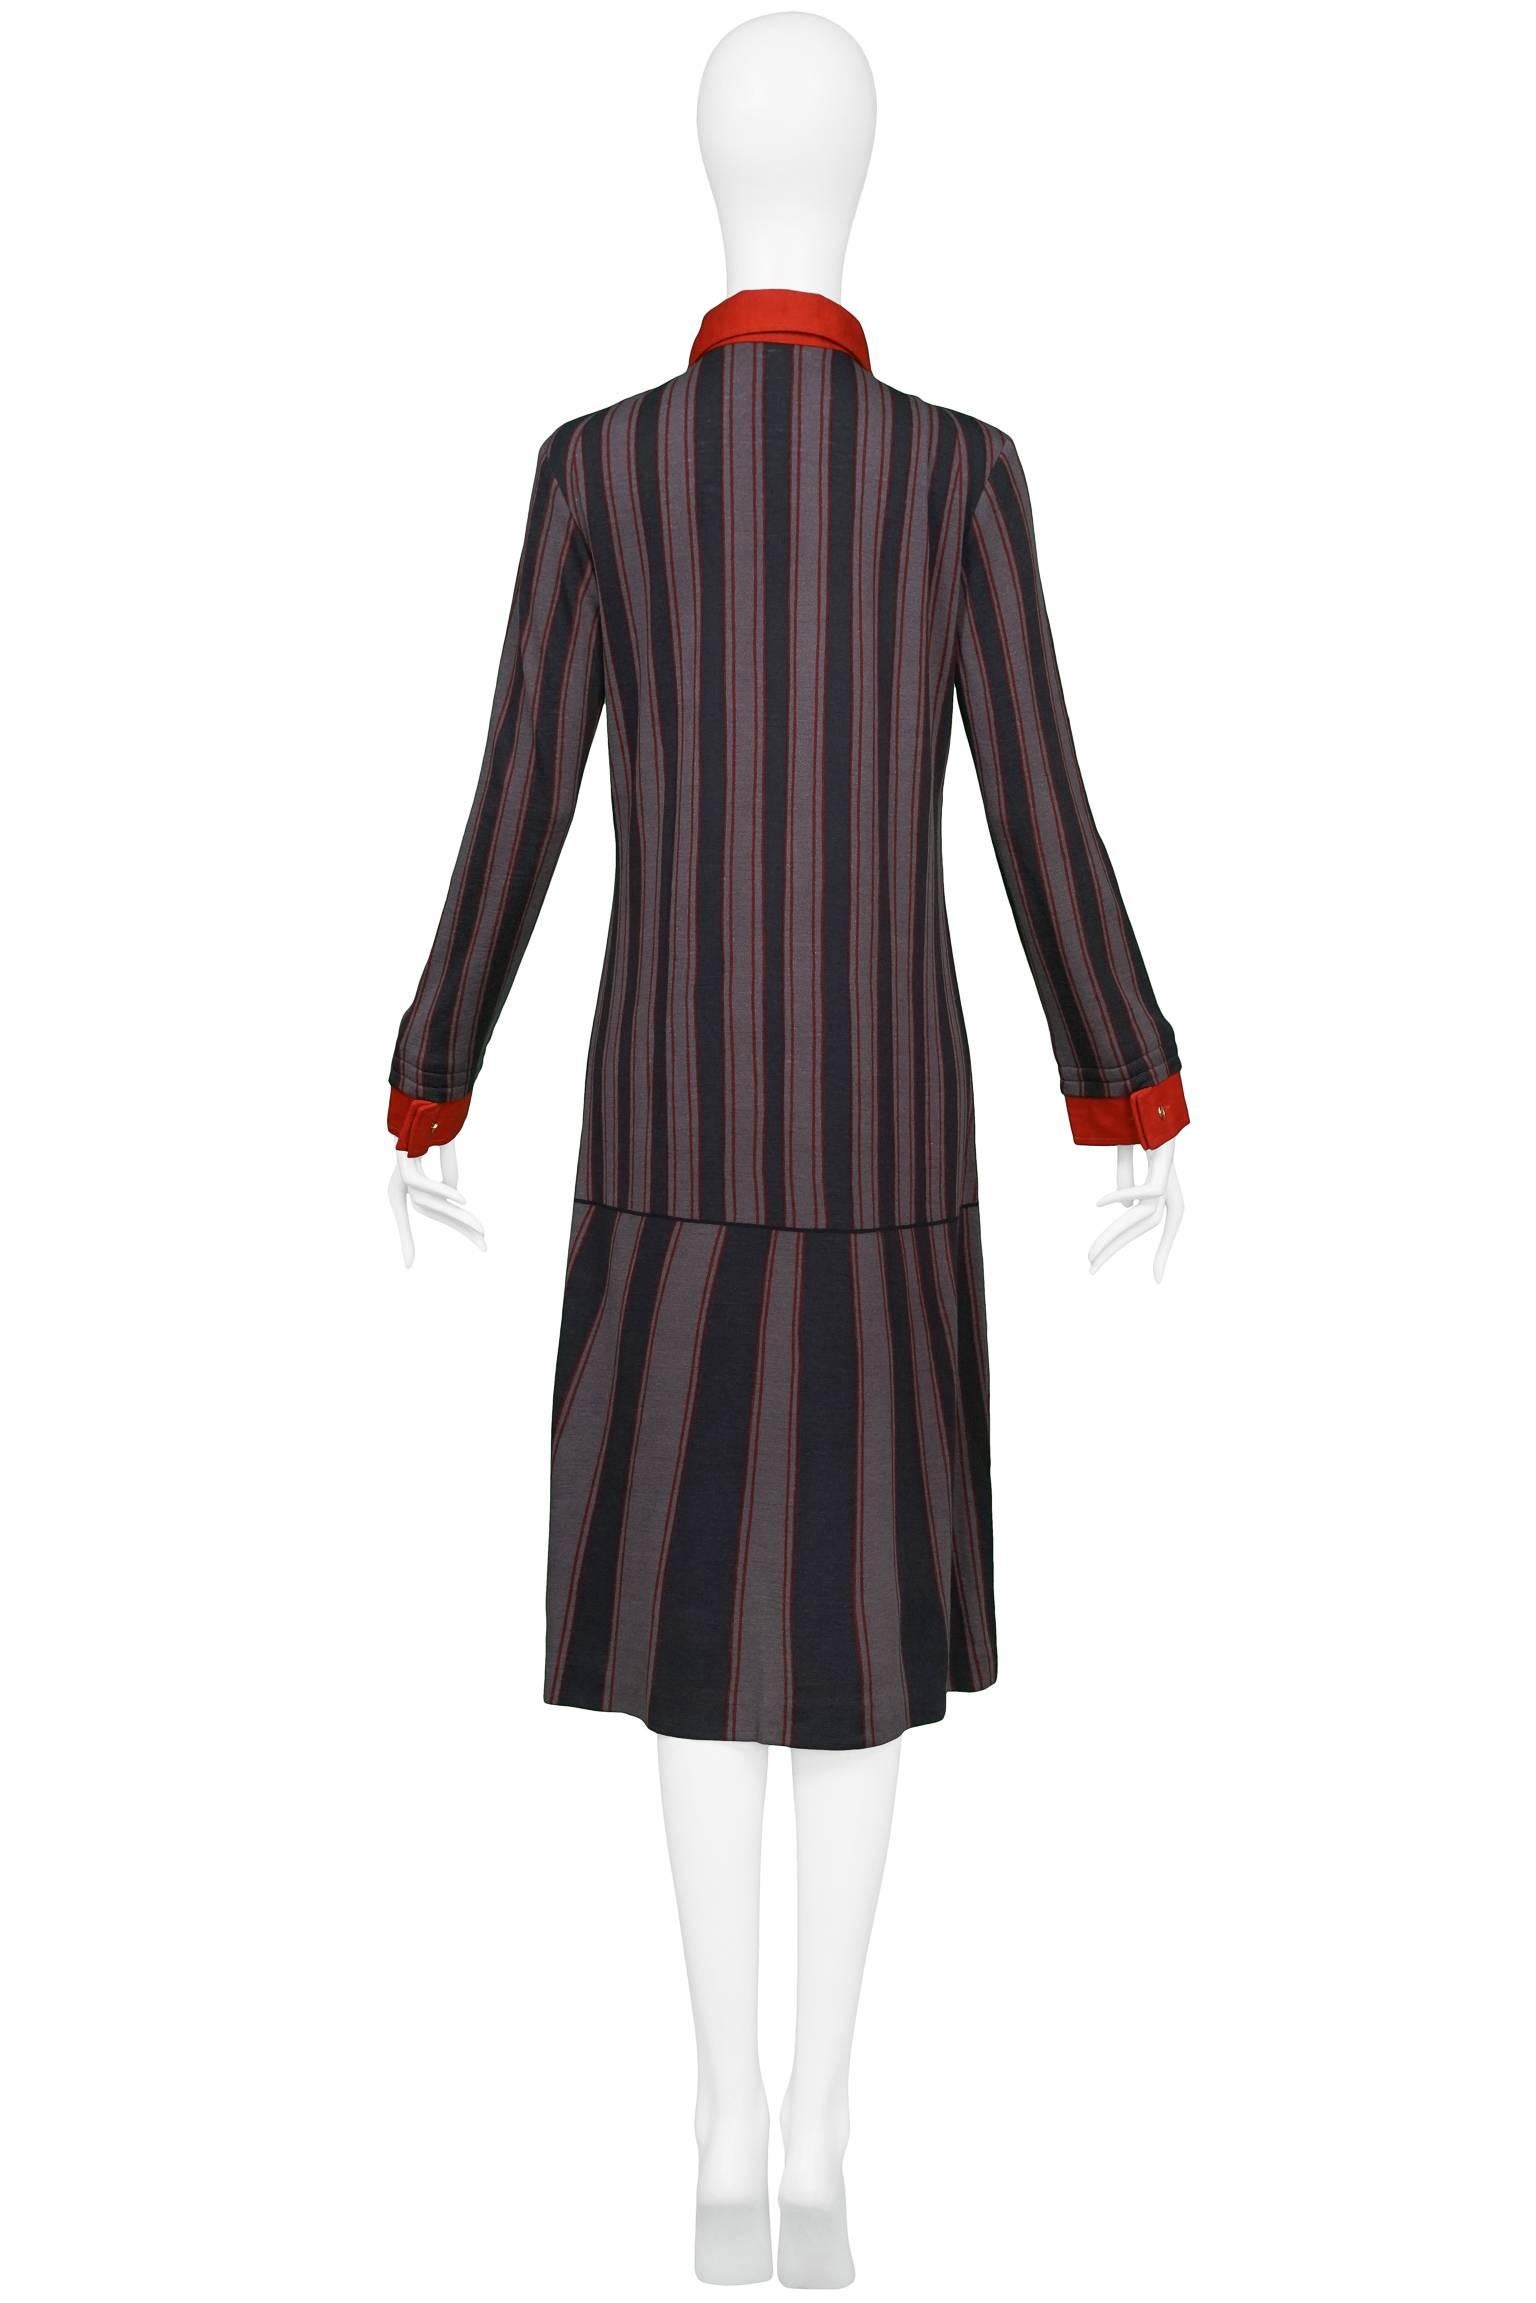 Women's Roberta di Camerino Trompe Grey, Red & Black Day Dress For Sale